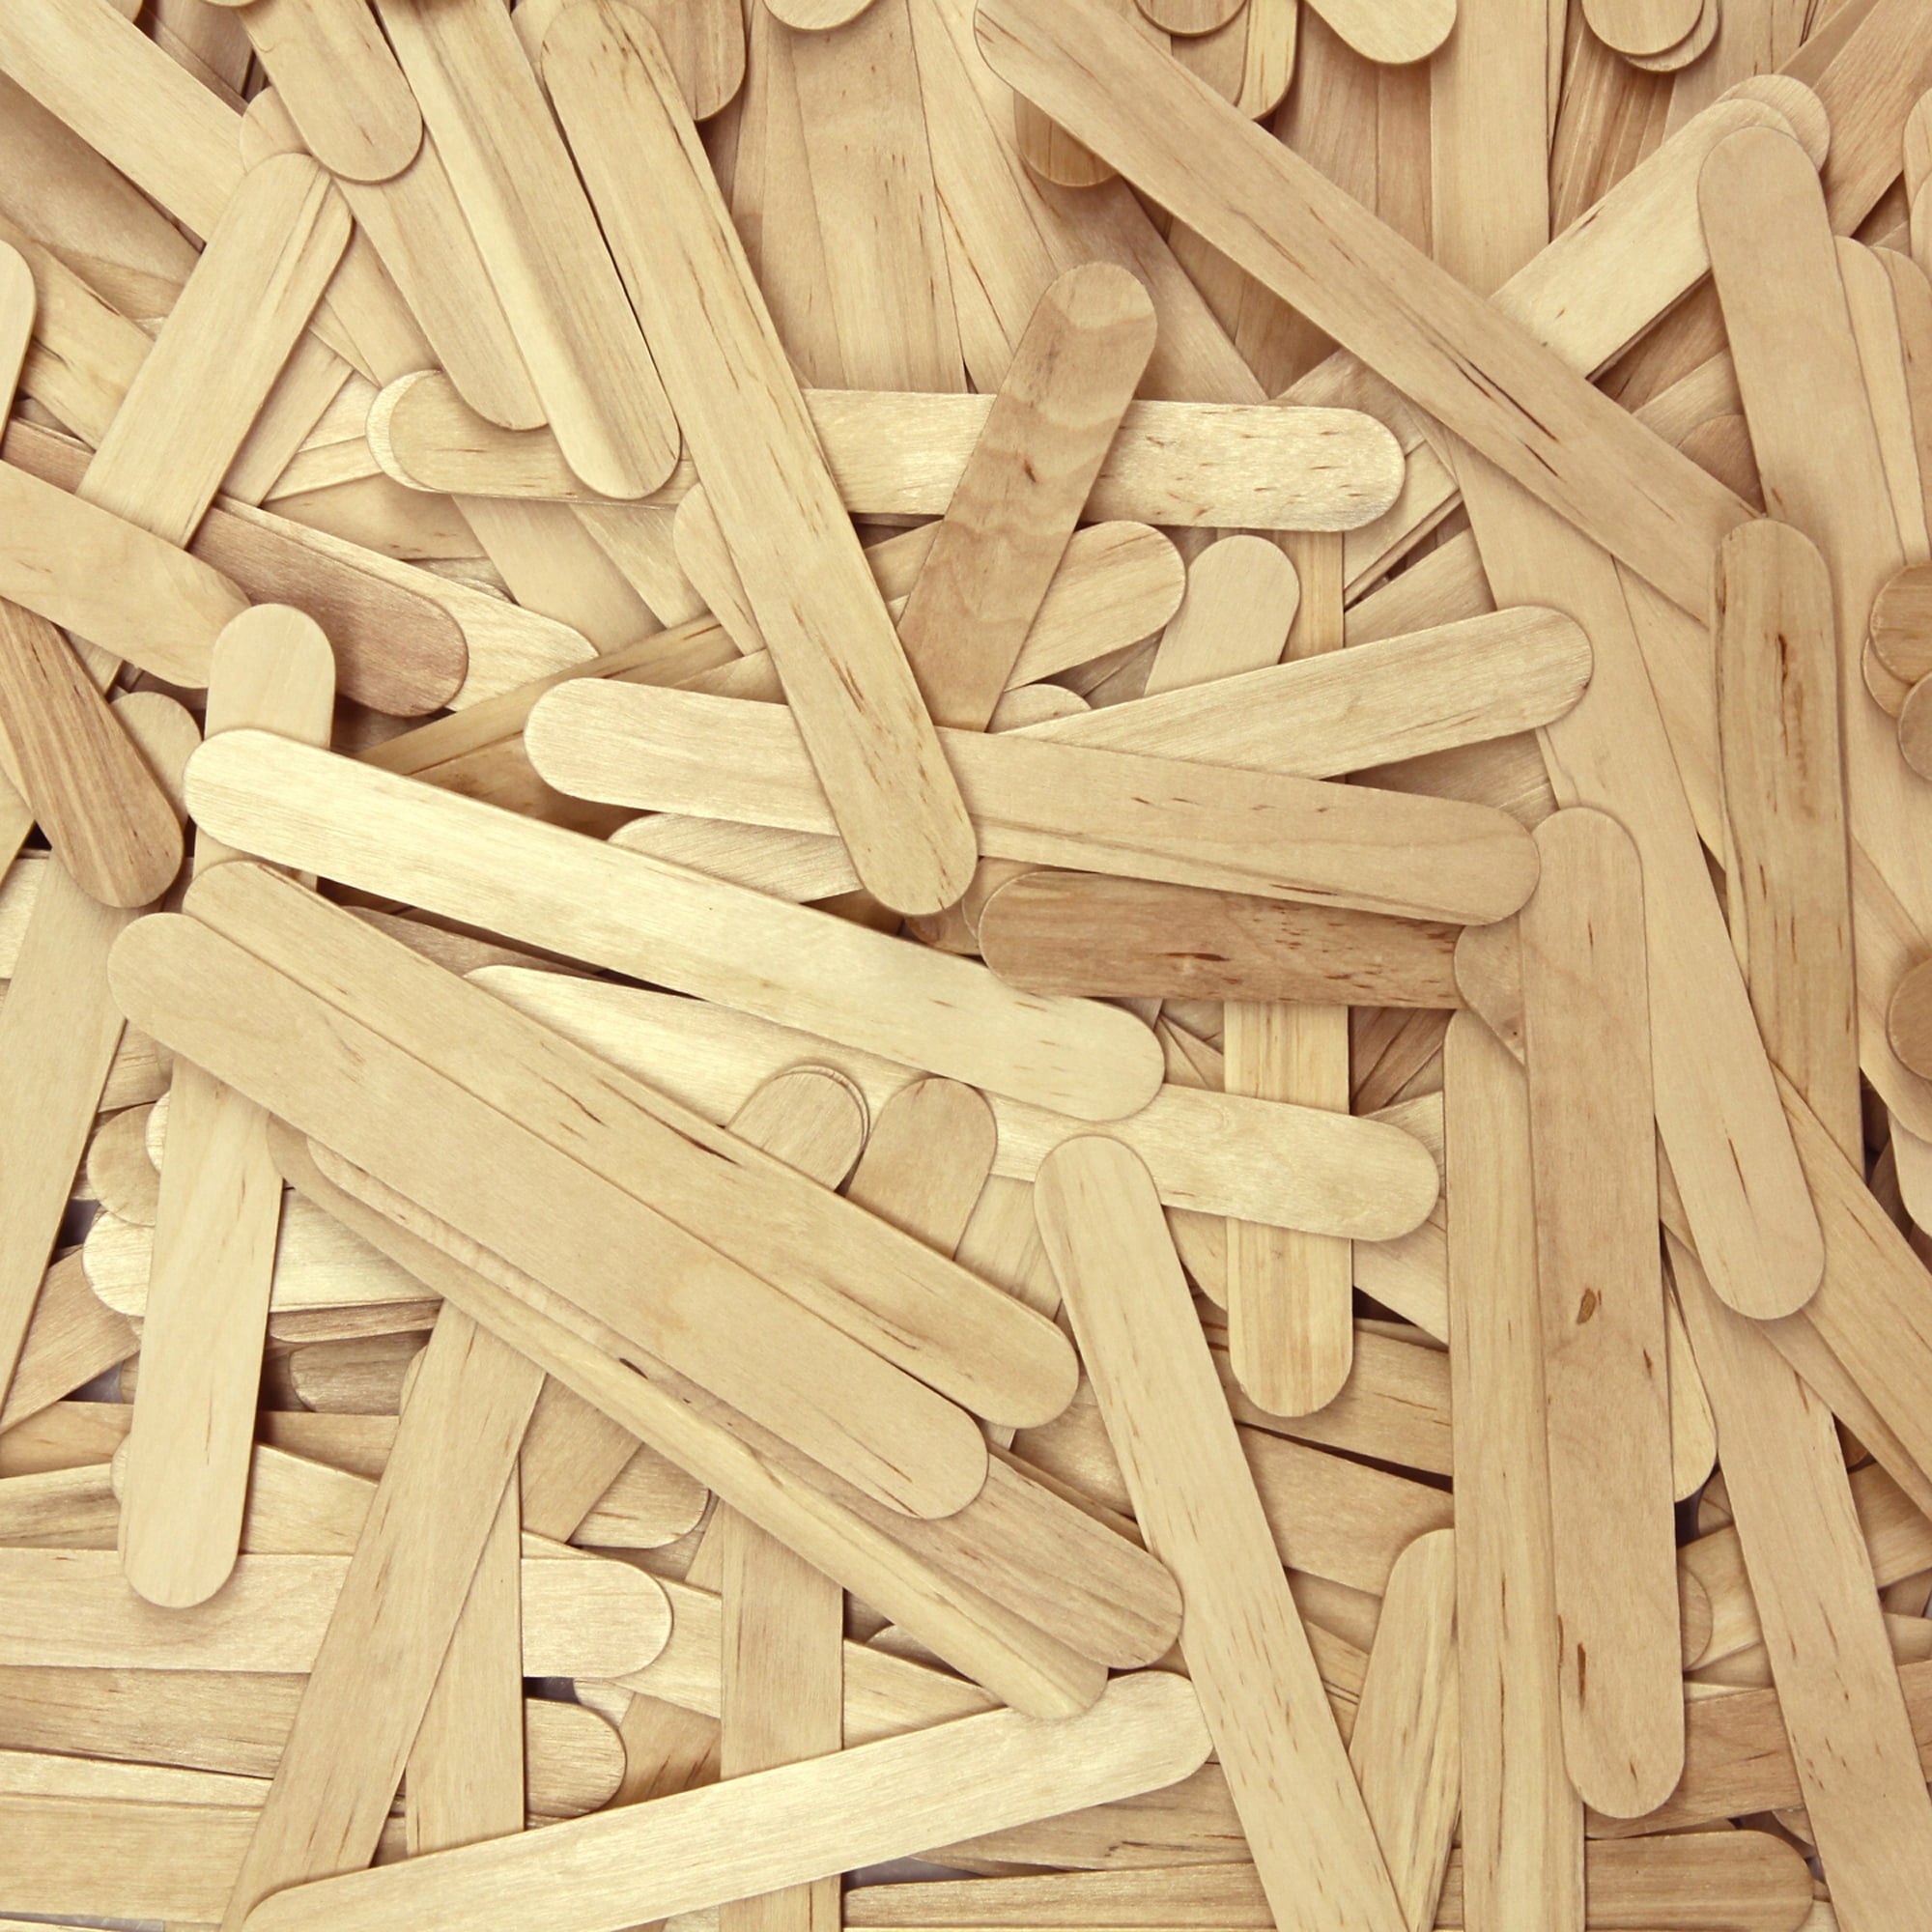 Chenille Kraft Wood Jumbo Craft Sticks, Natural, 500/Box